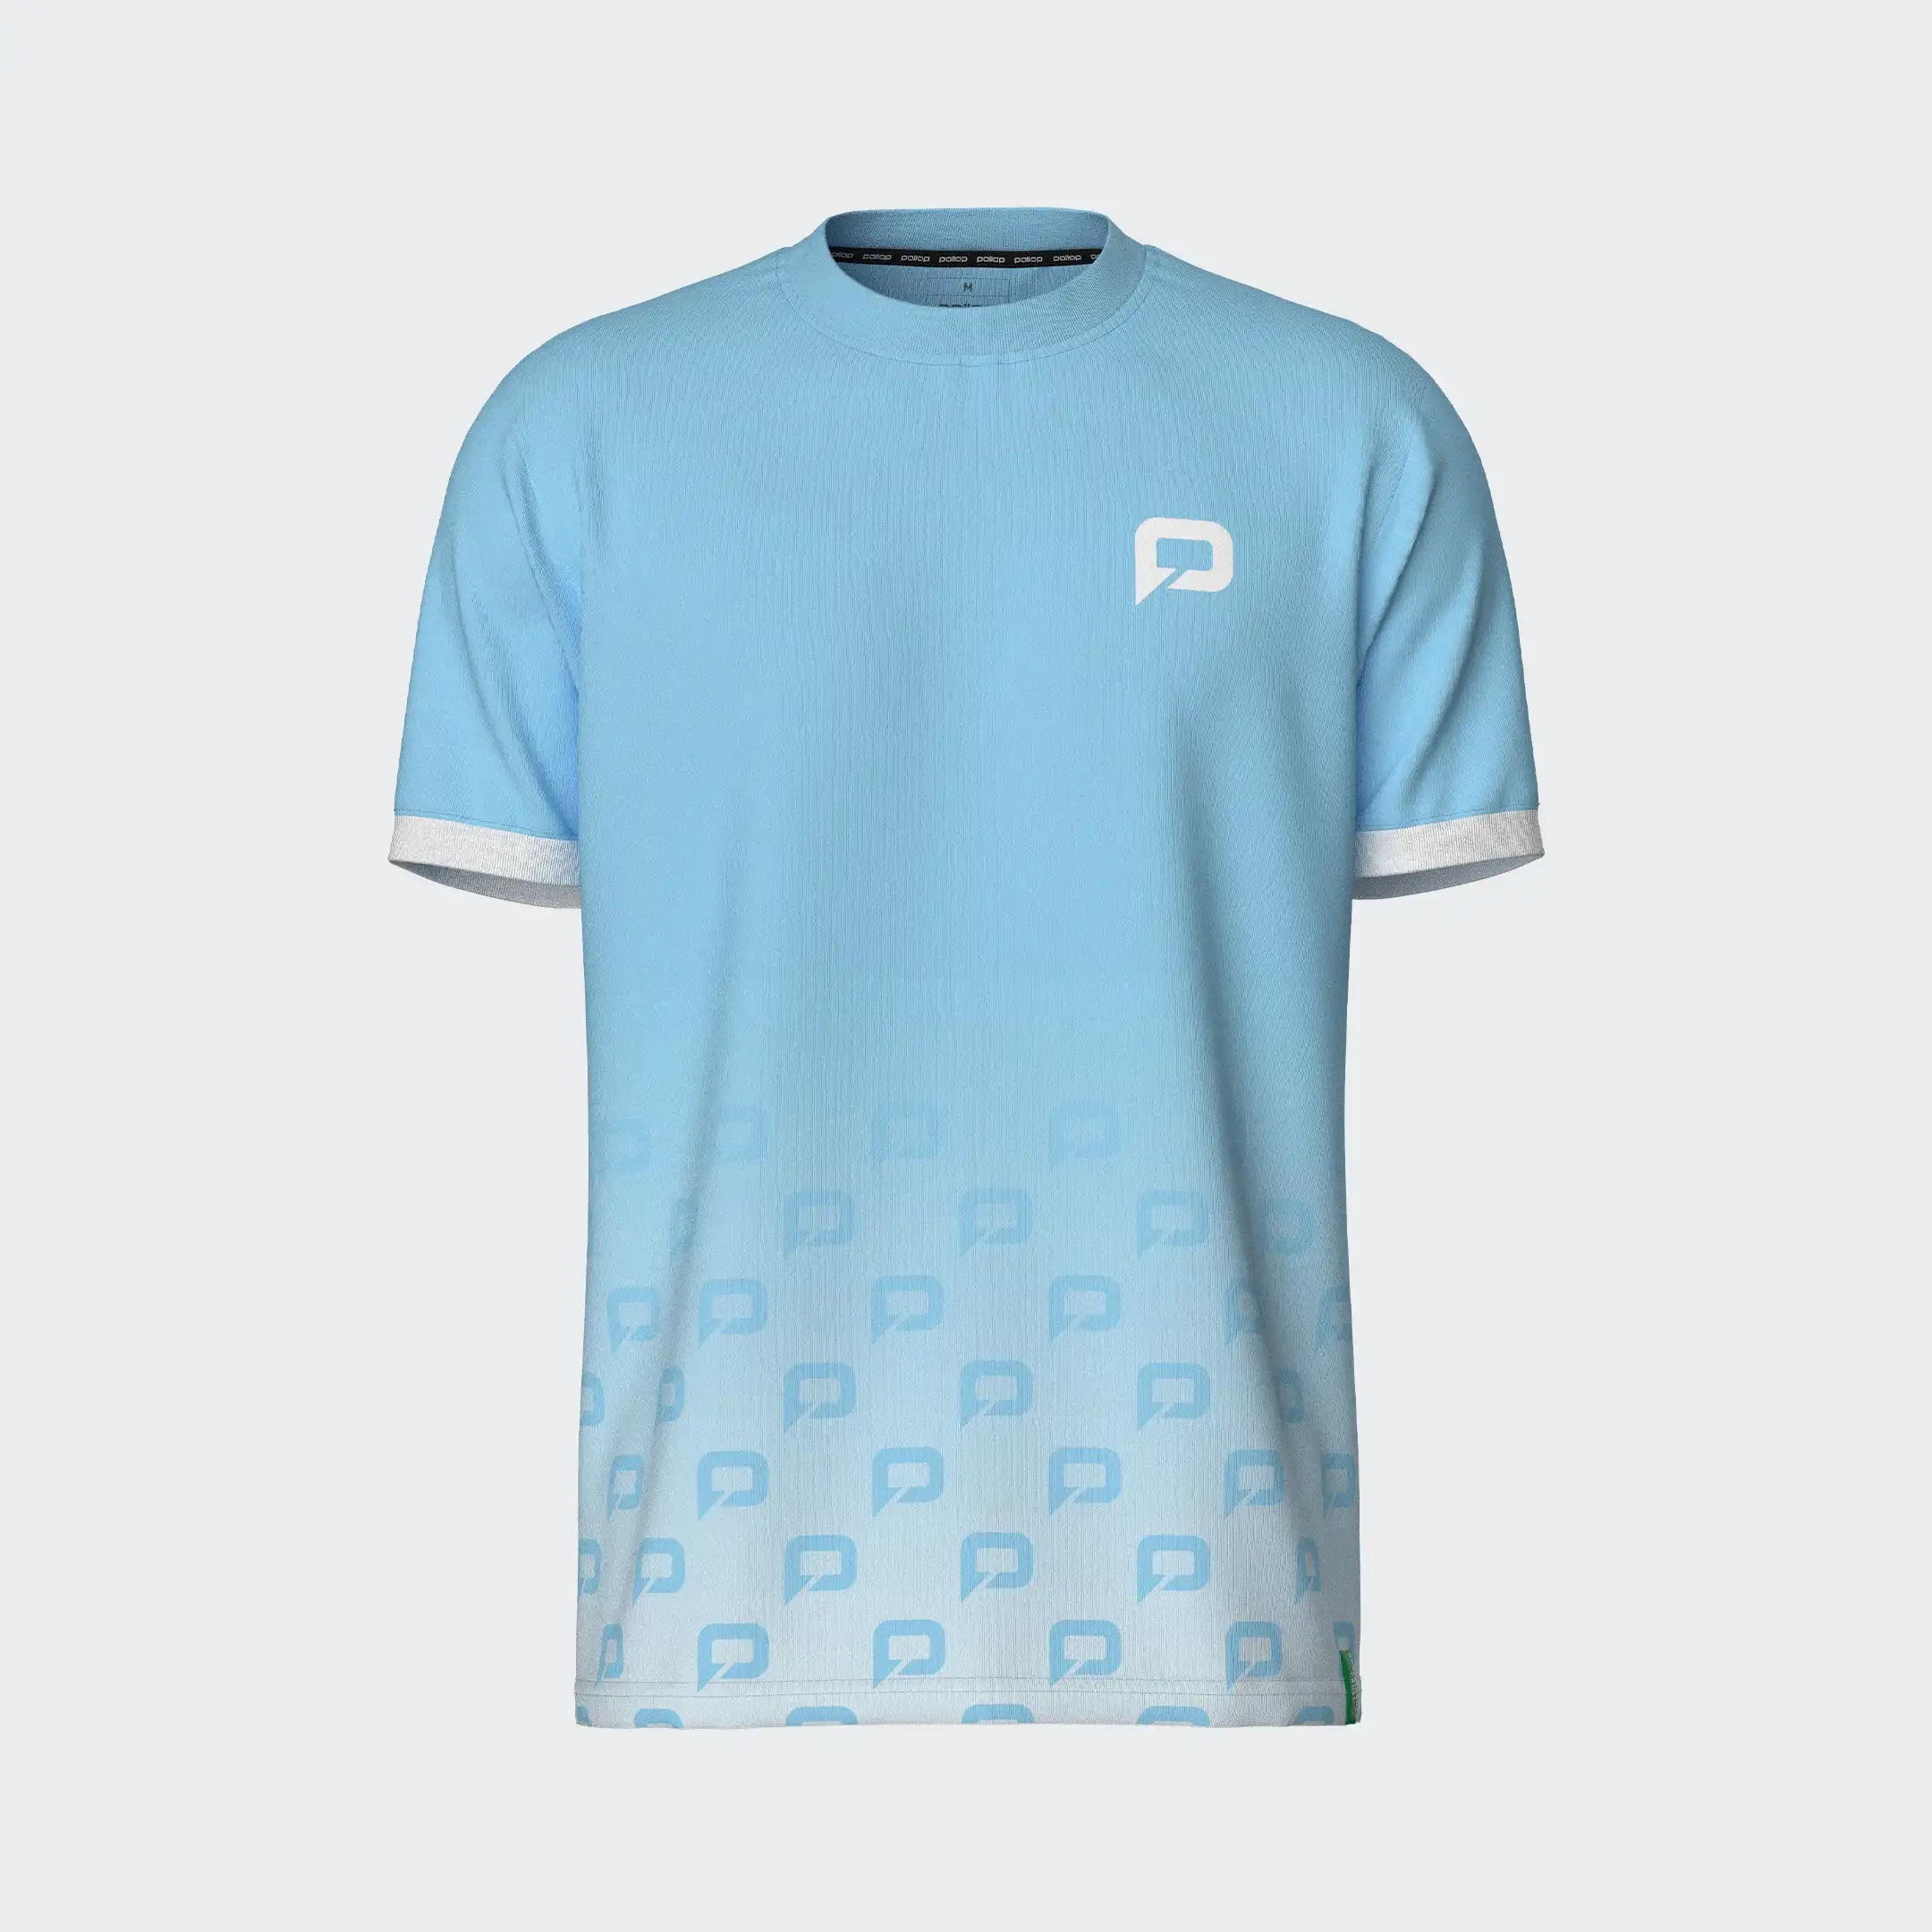 Pallap Technical pro Shirt pulse blue/white